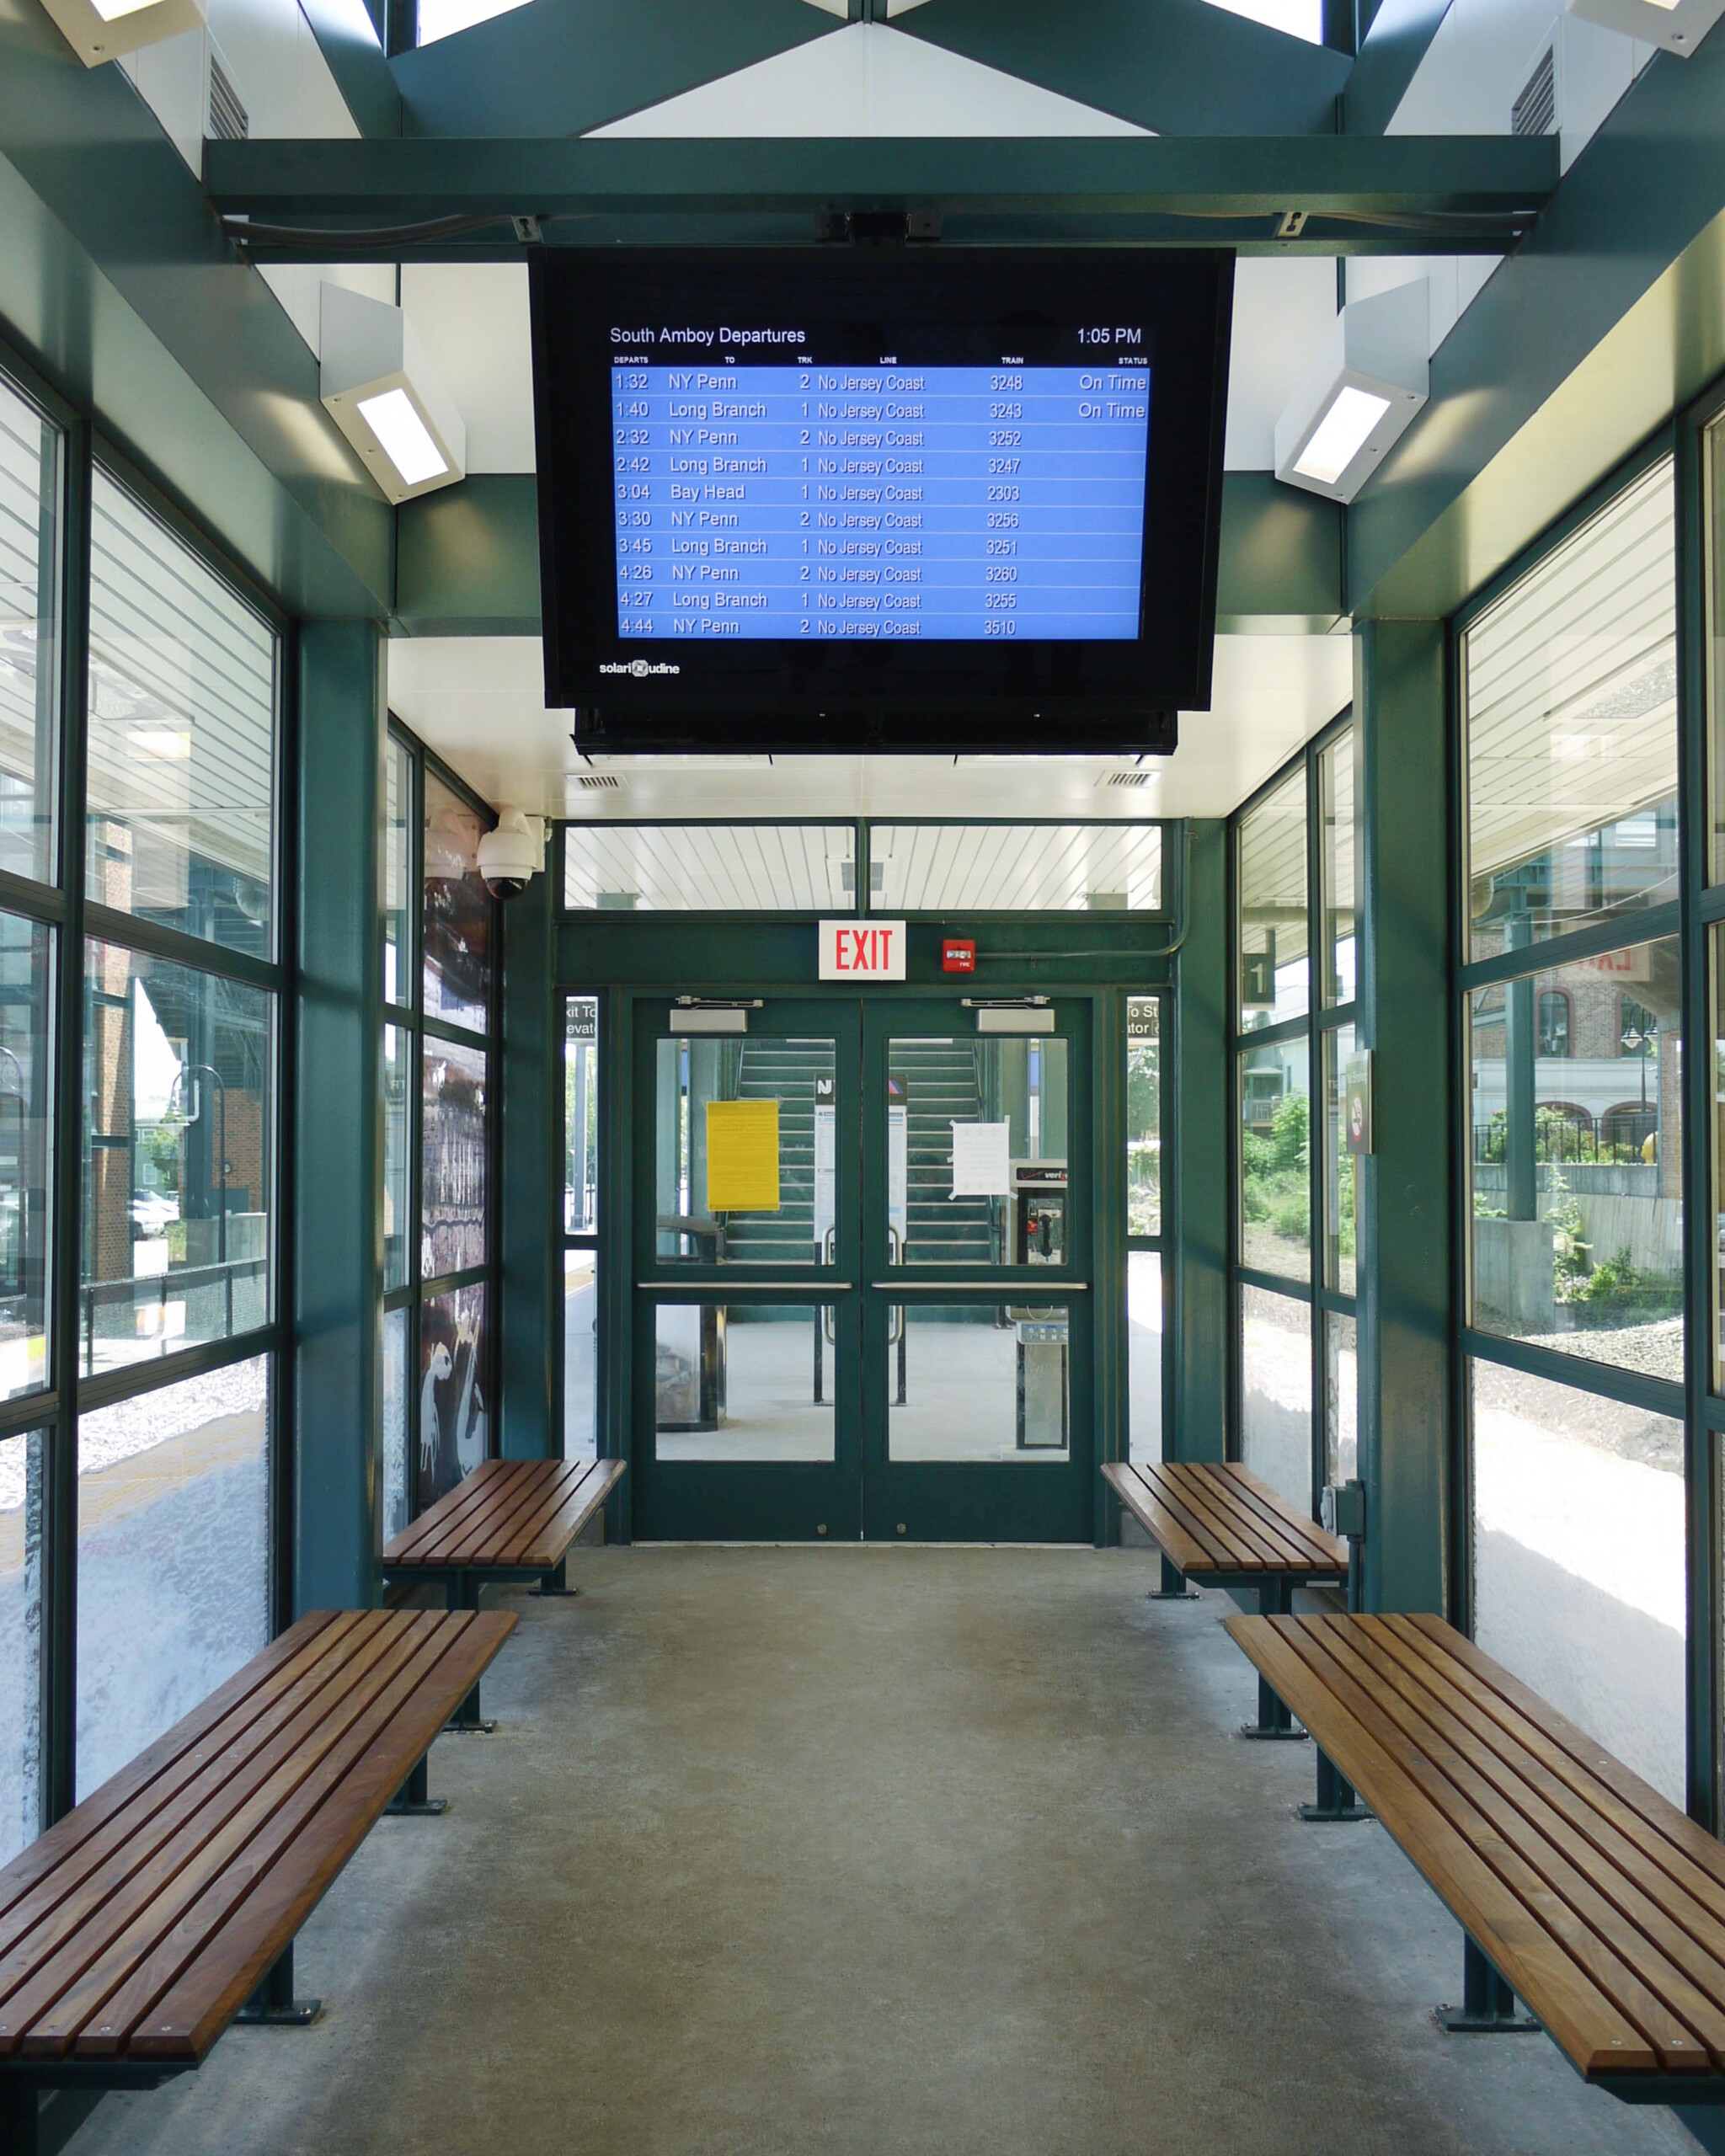 South Amboy Station enclosed waiting area